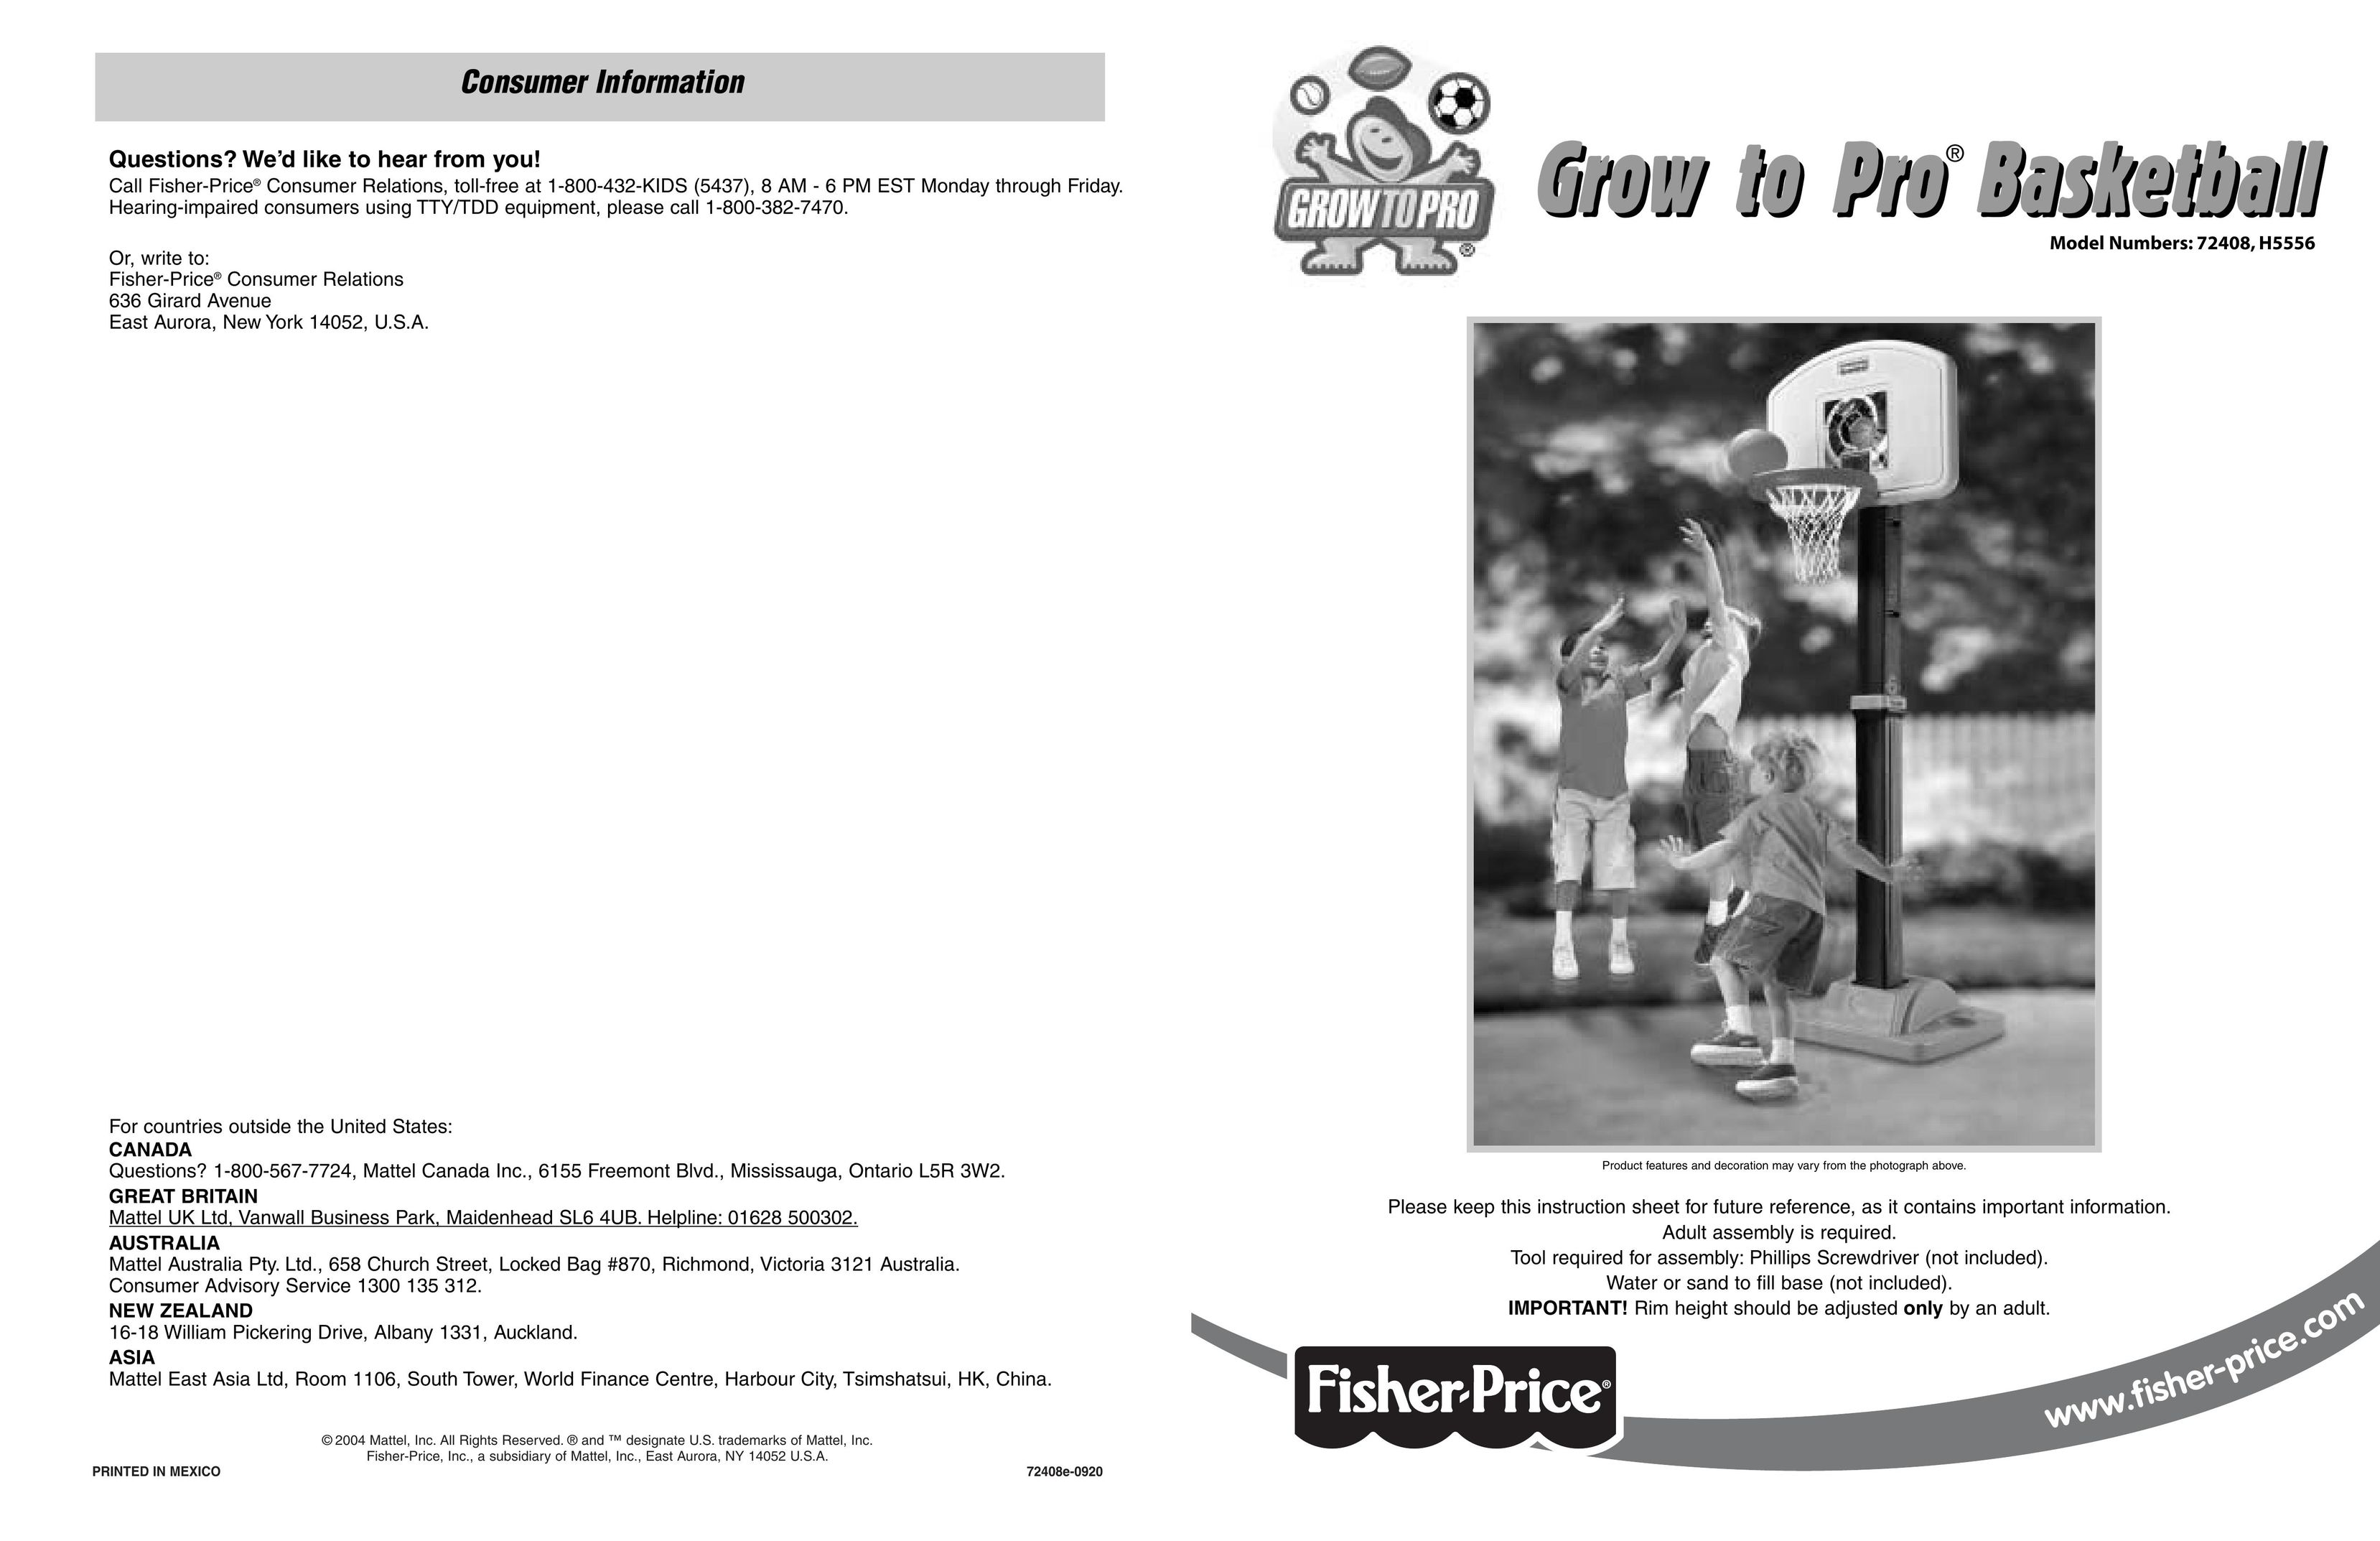 Fisher-Price 72408 Fitness Equipment User Manual